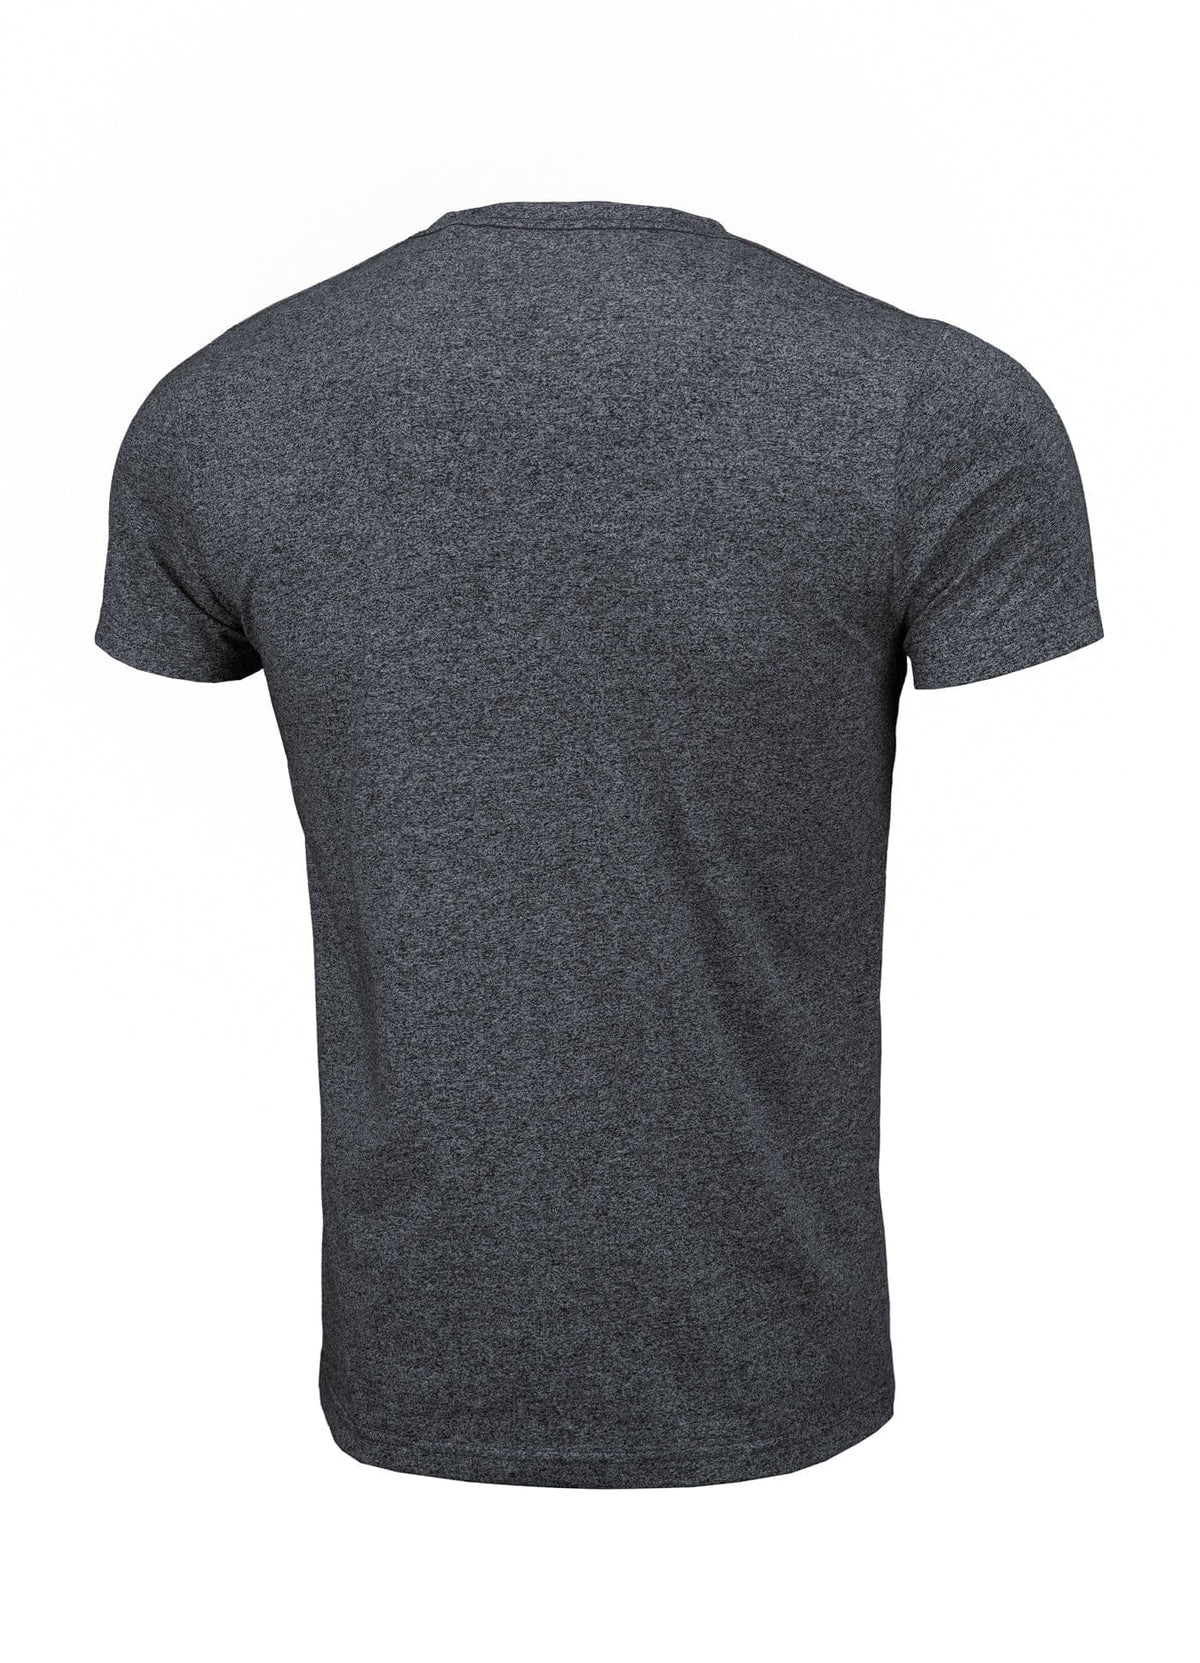 PITBULL USA Navy Melange T-Shirt